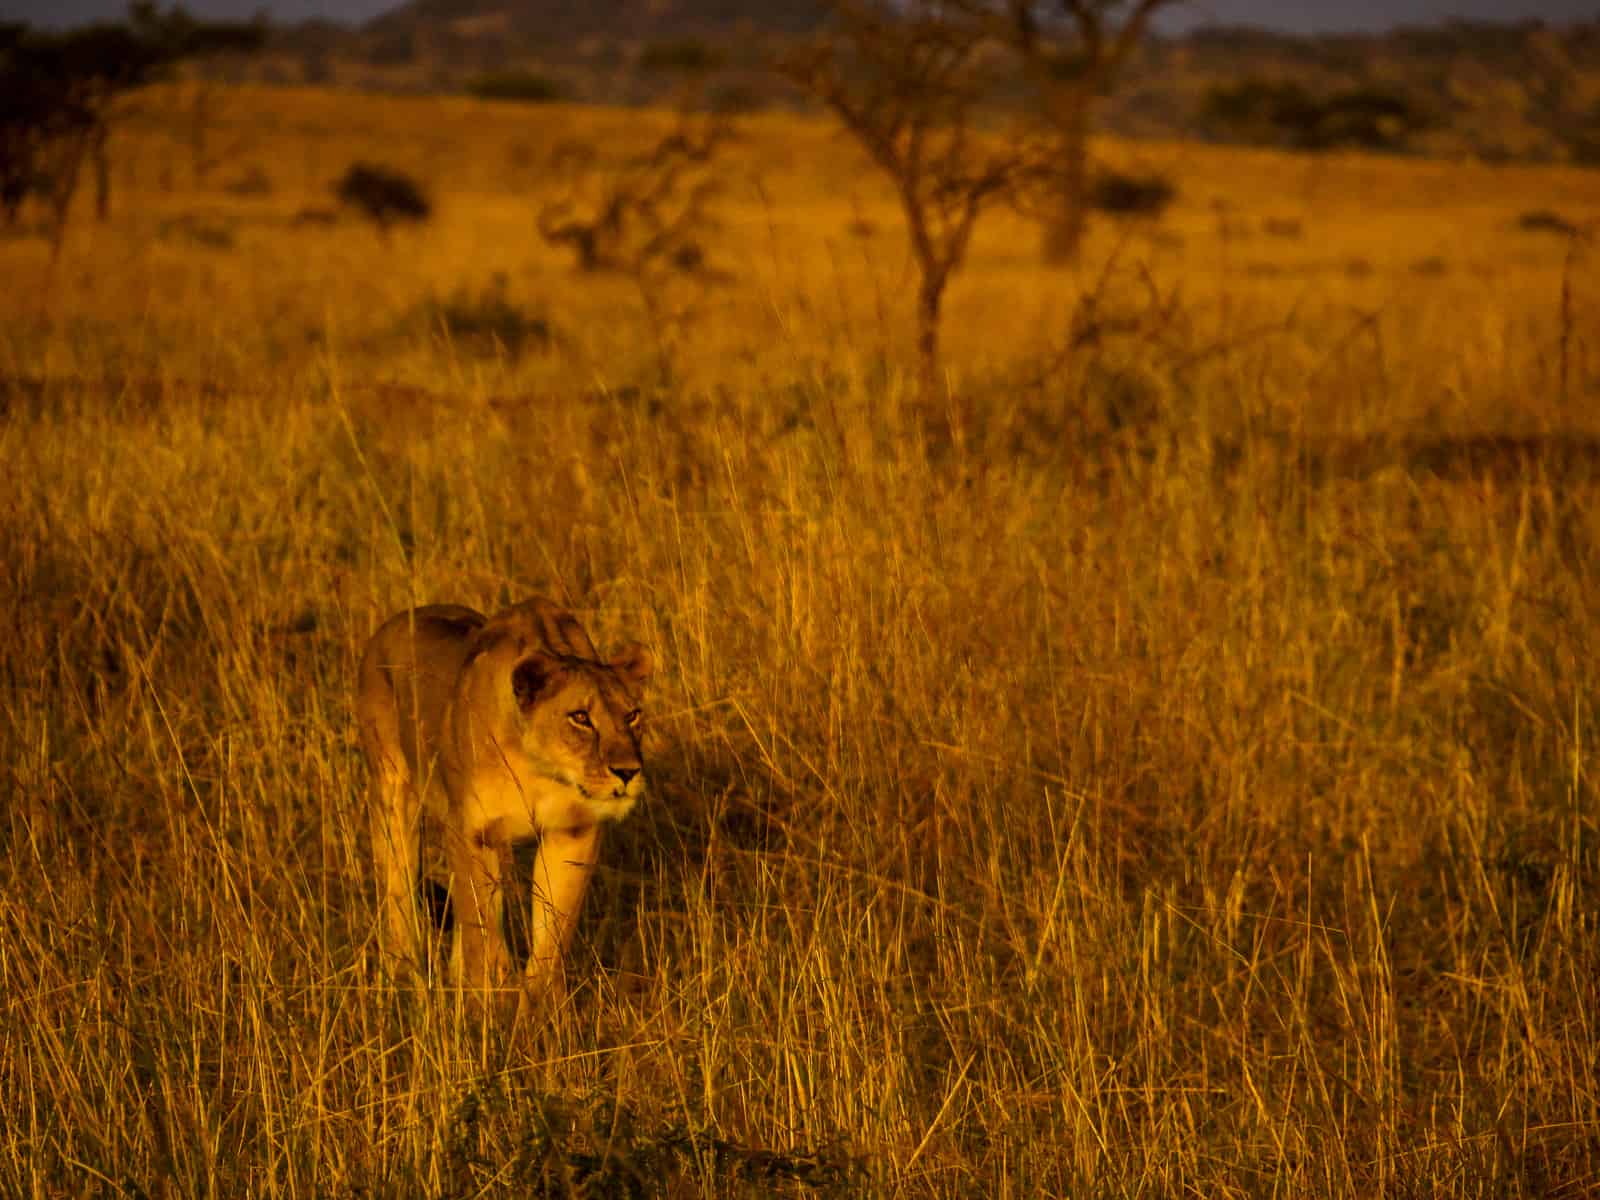 lion on the hunt - tanzania honeymoon safari guide